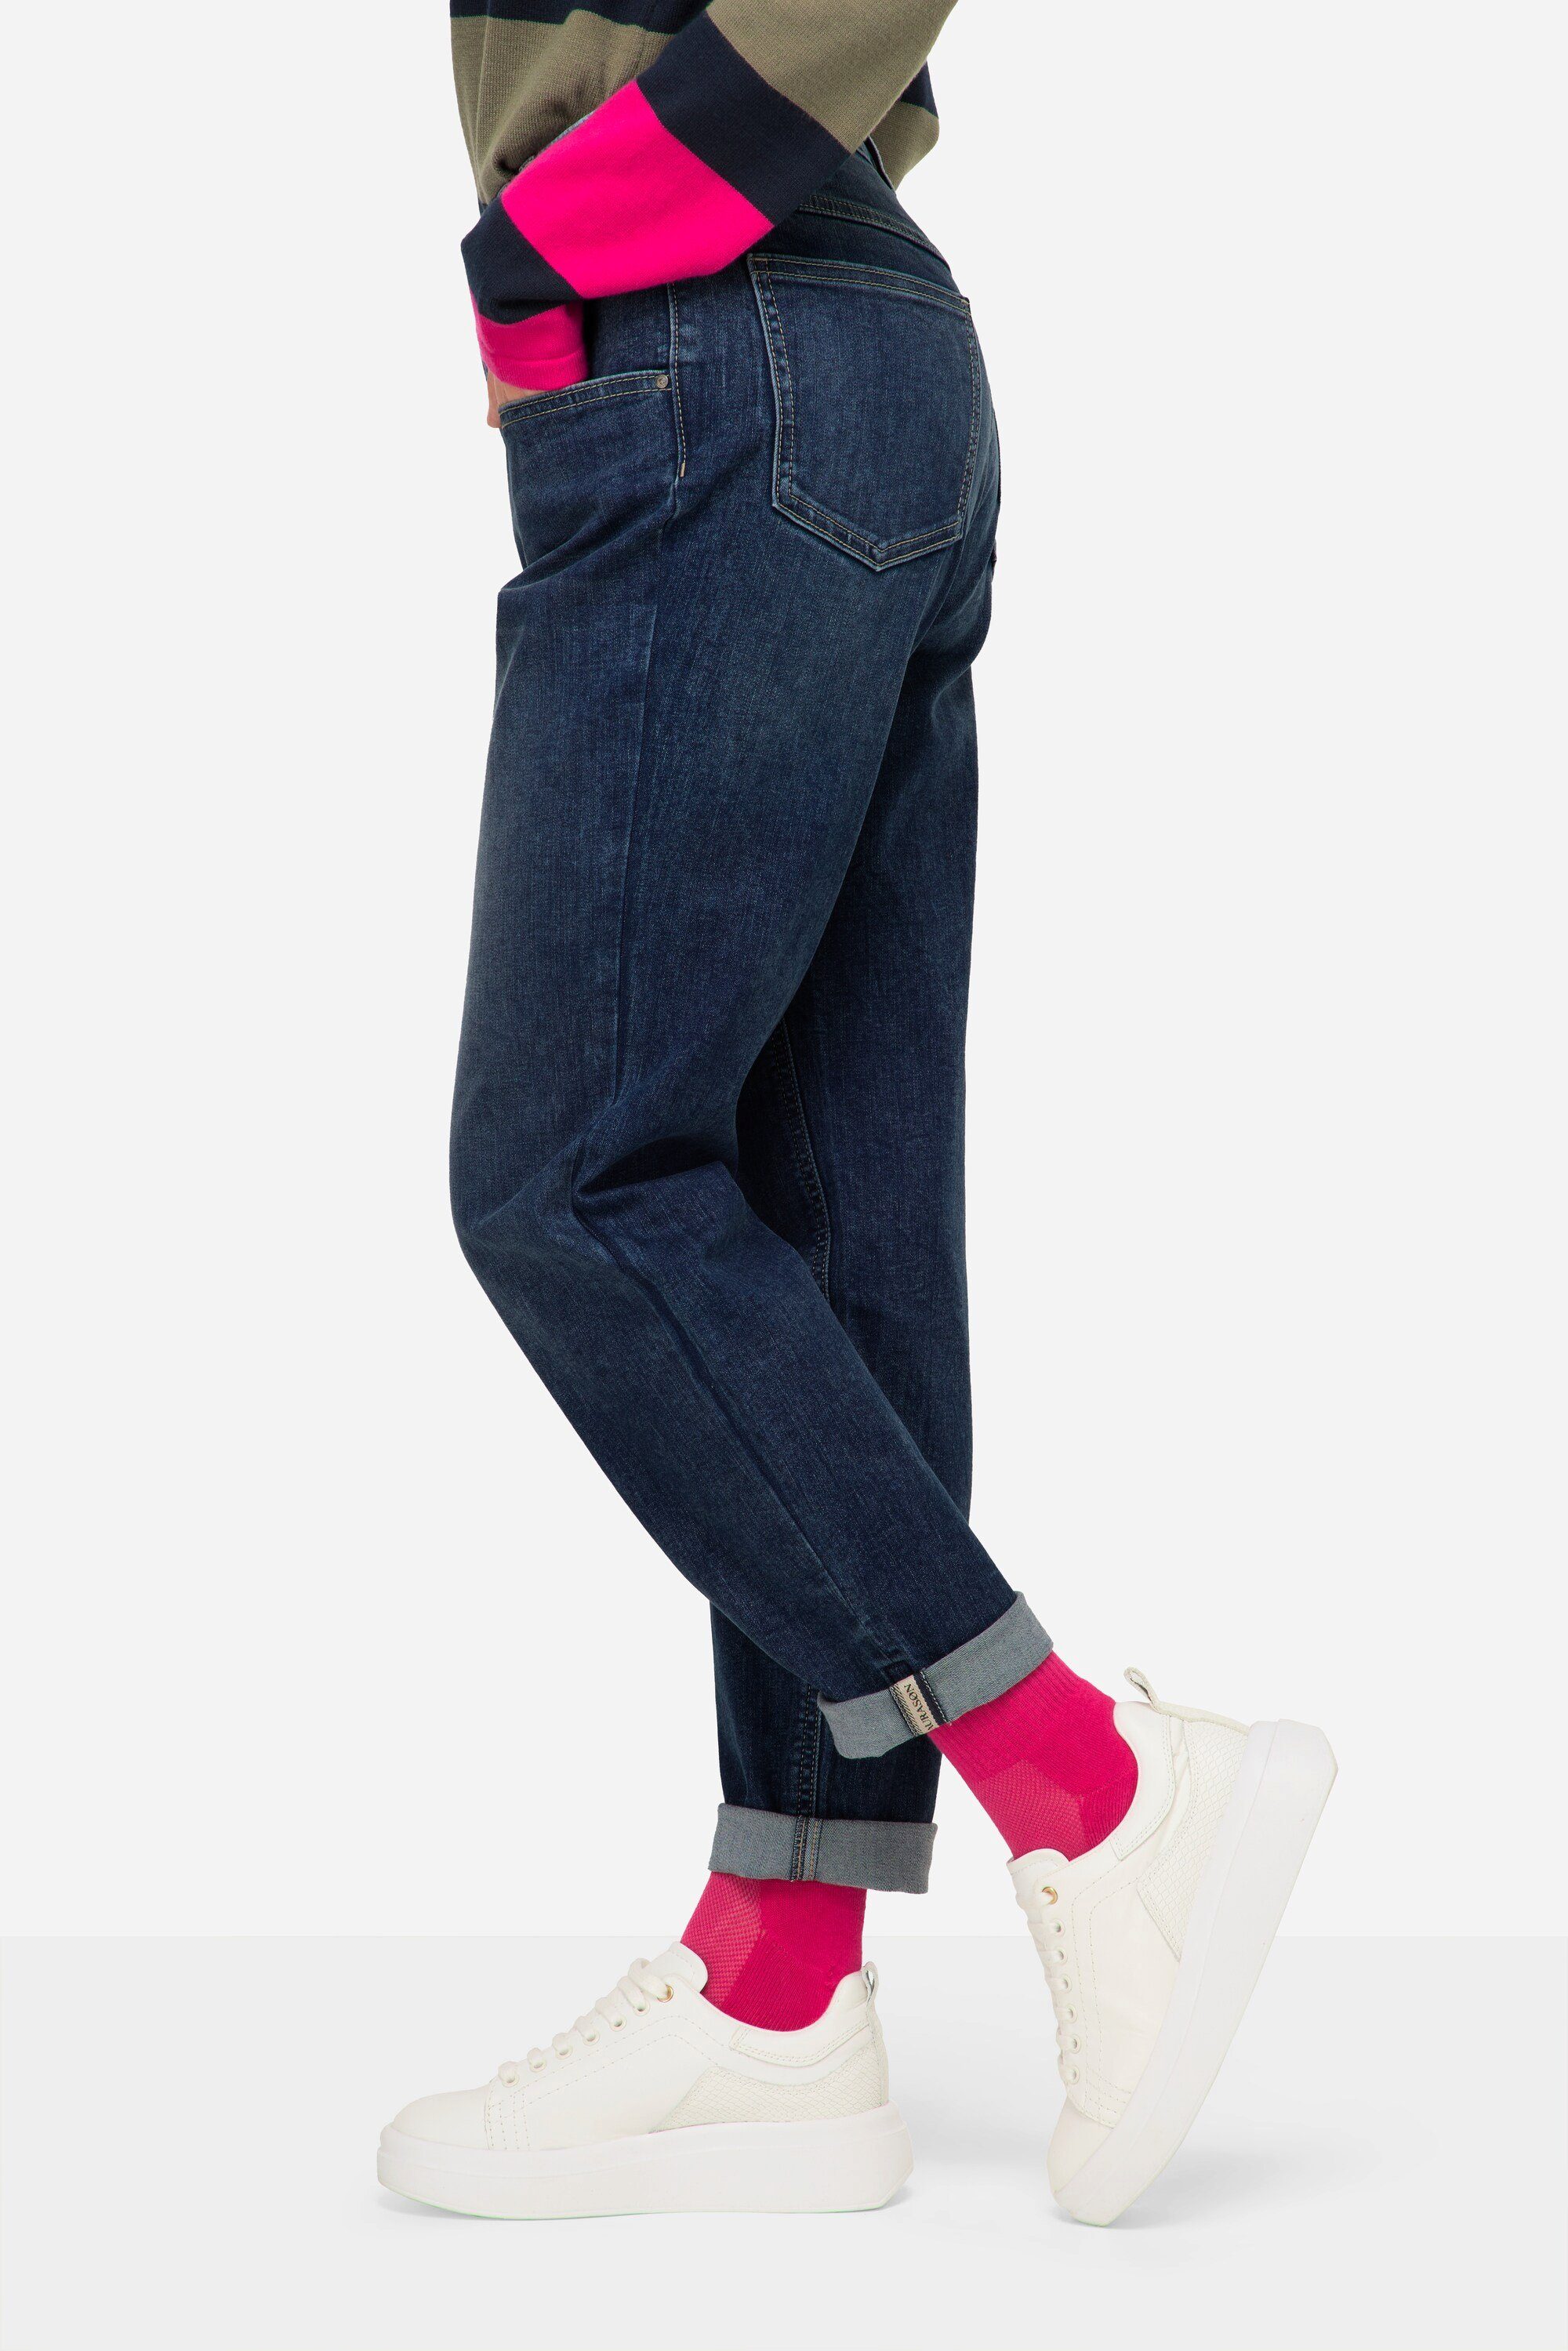 Passform weite Laurasøn Karotten-Jeans Regular-fit-Jeans 5-Pocket-Form